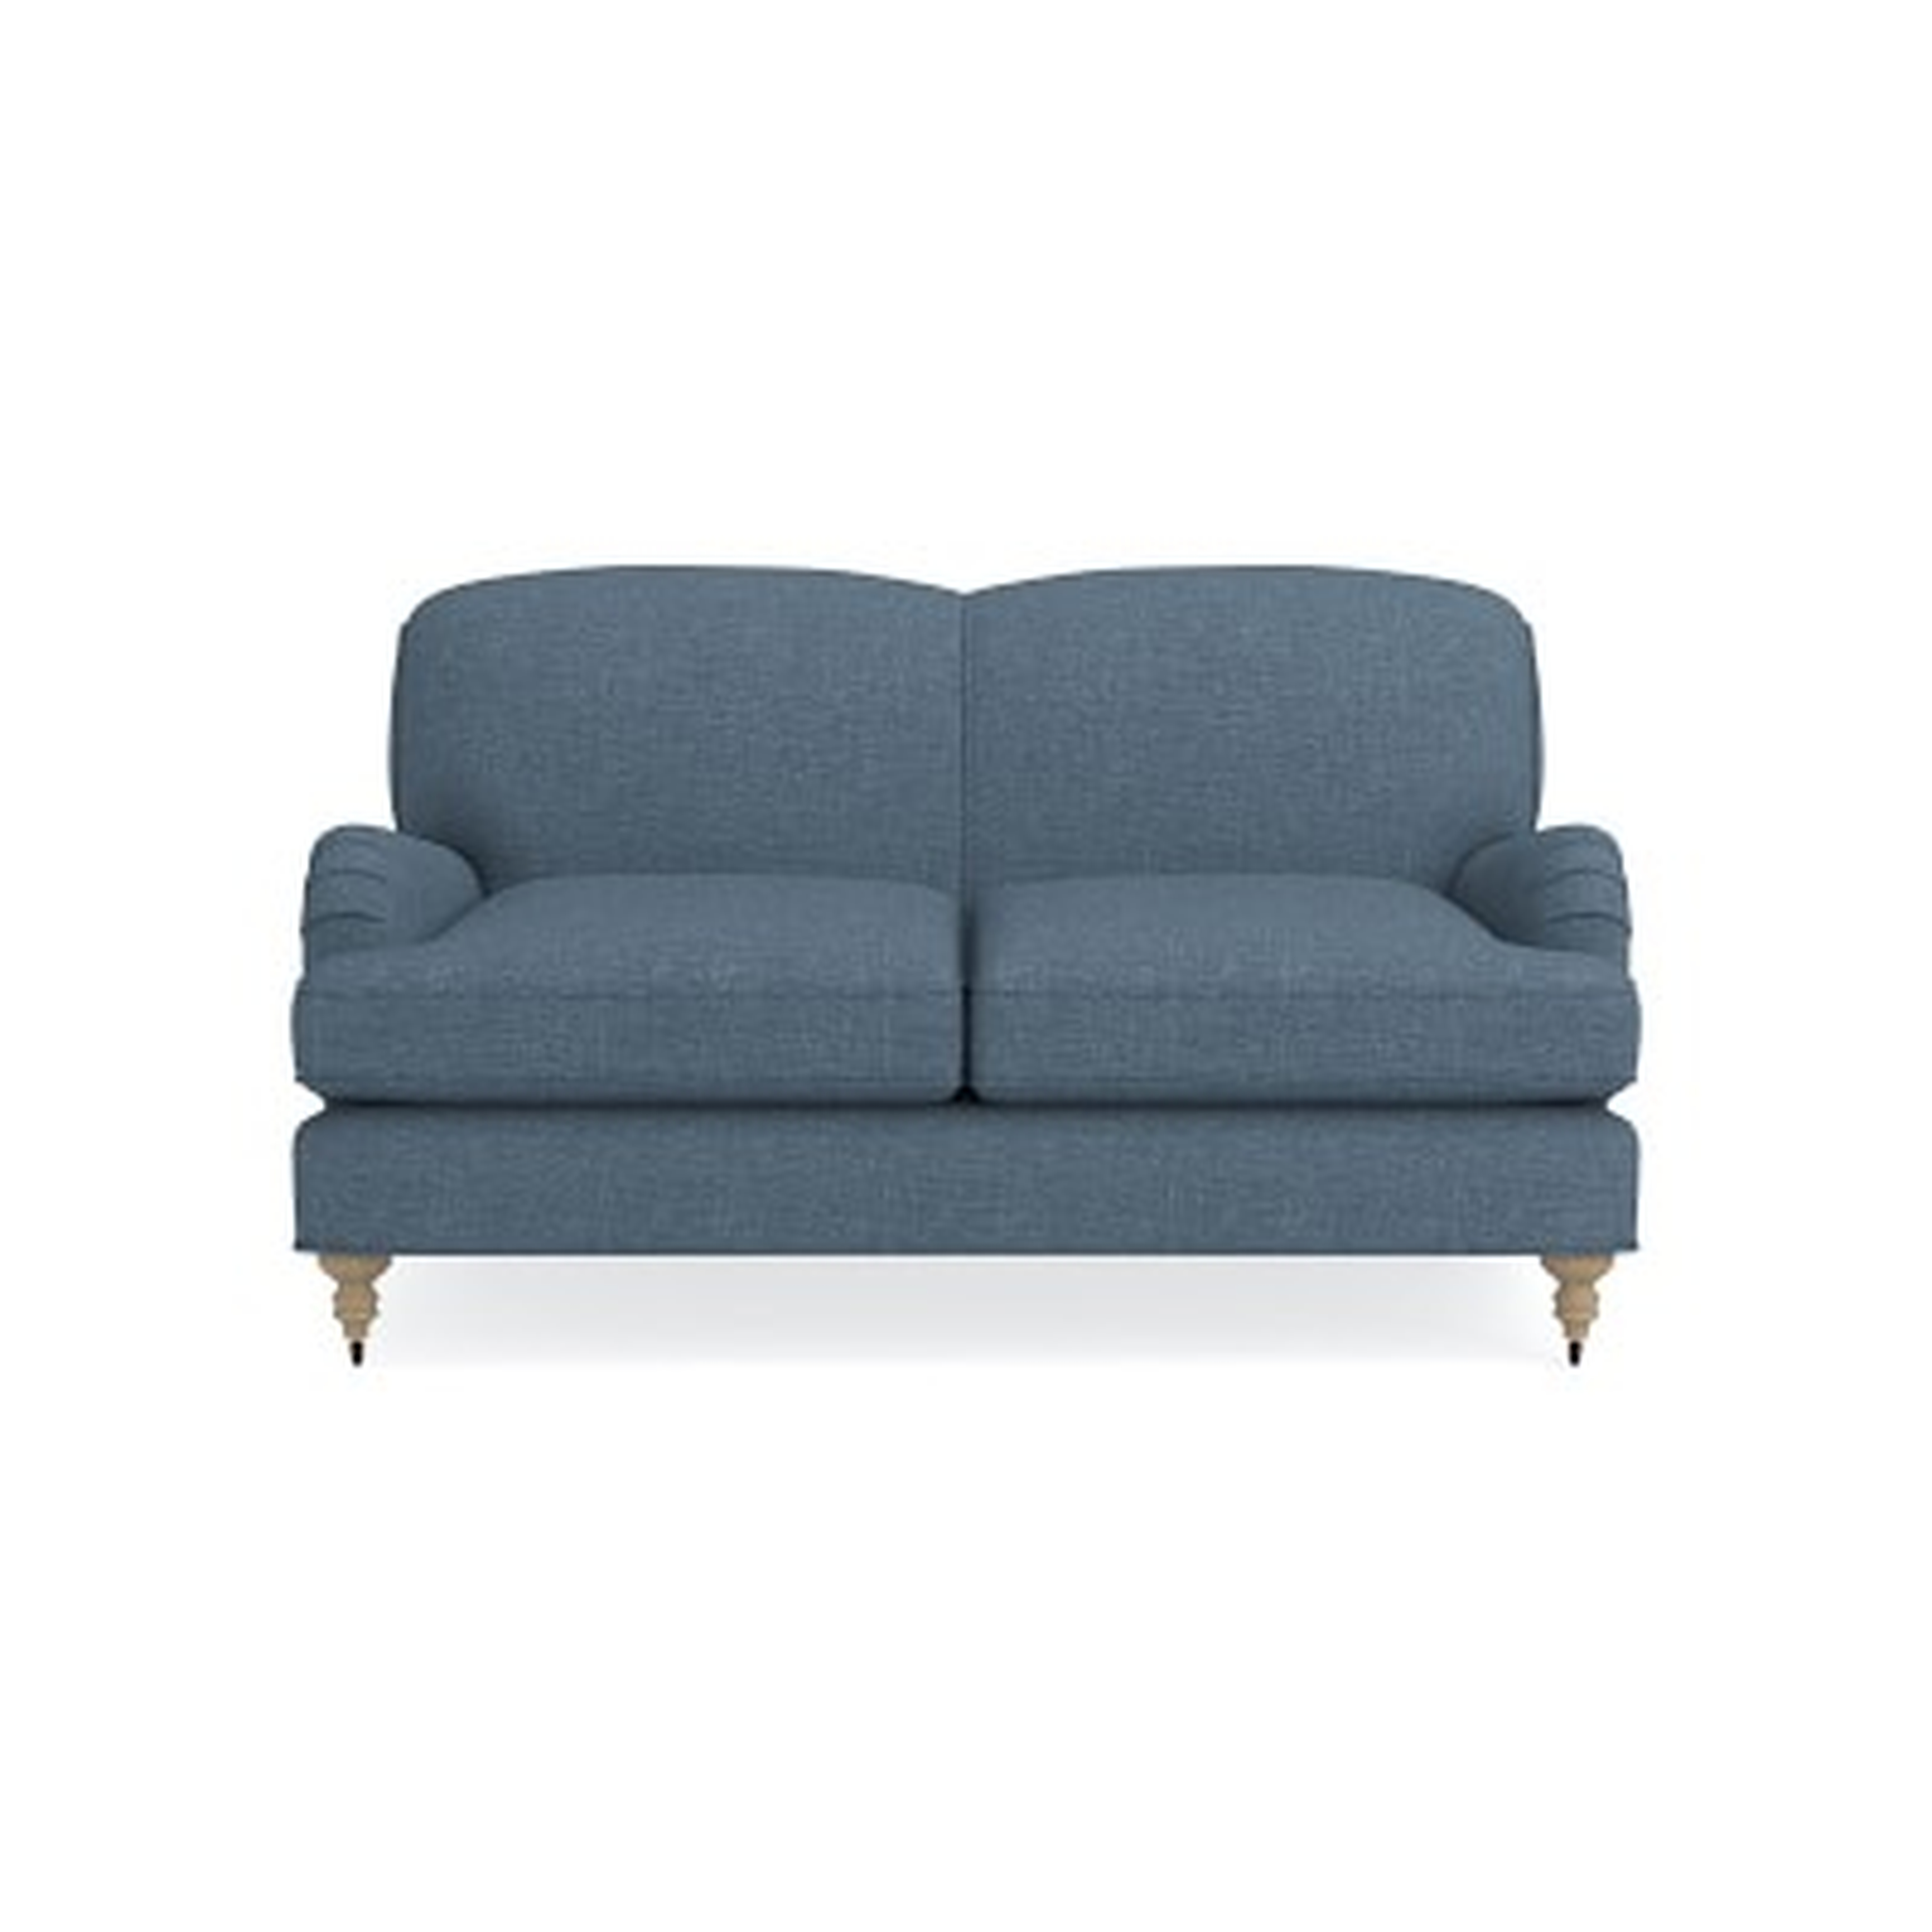 Bedford 61" Loveseat, Standard Cushion, Laundered Belgian Linen, Ciel, Natural Leg - Williams Sonoma